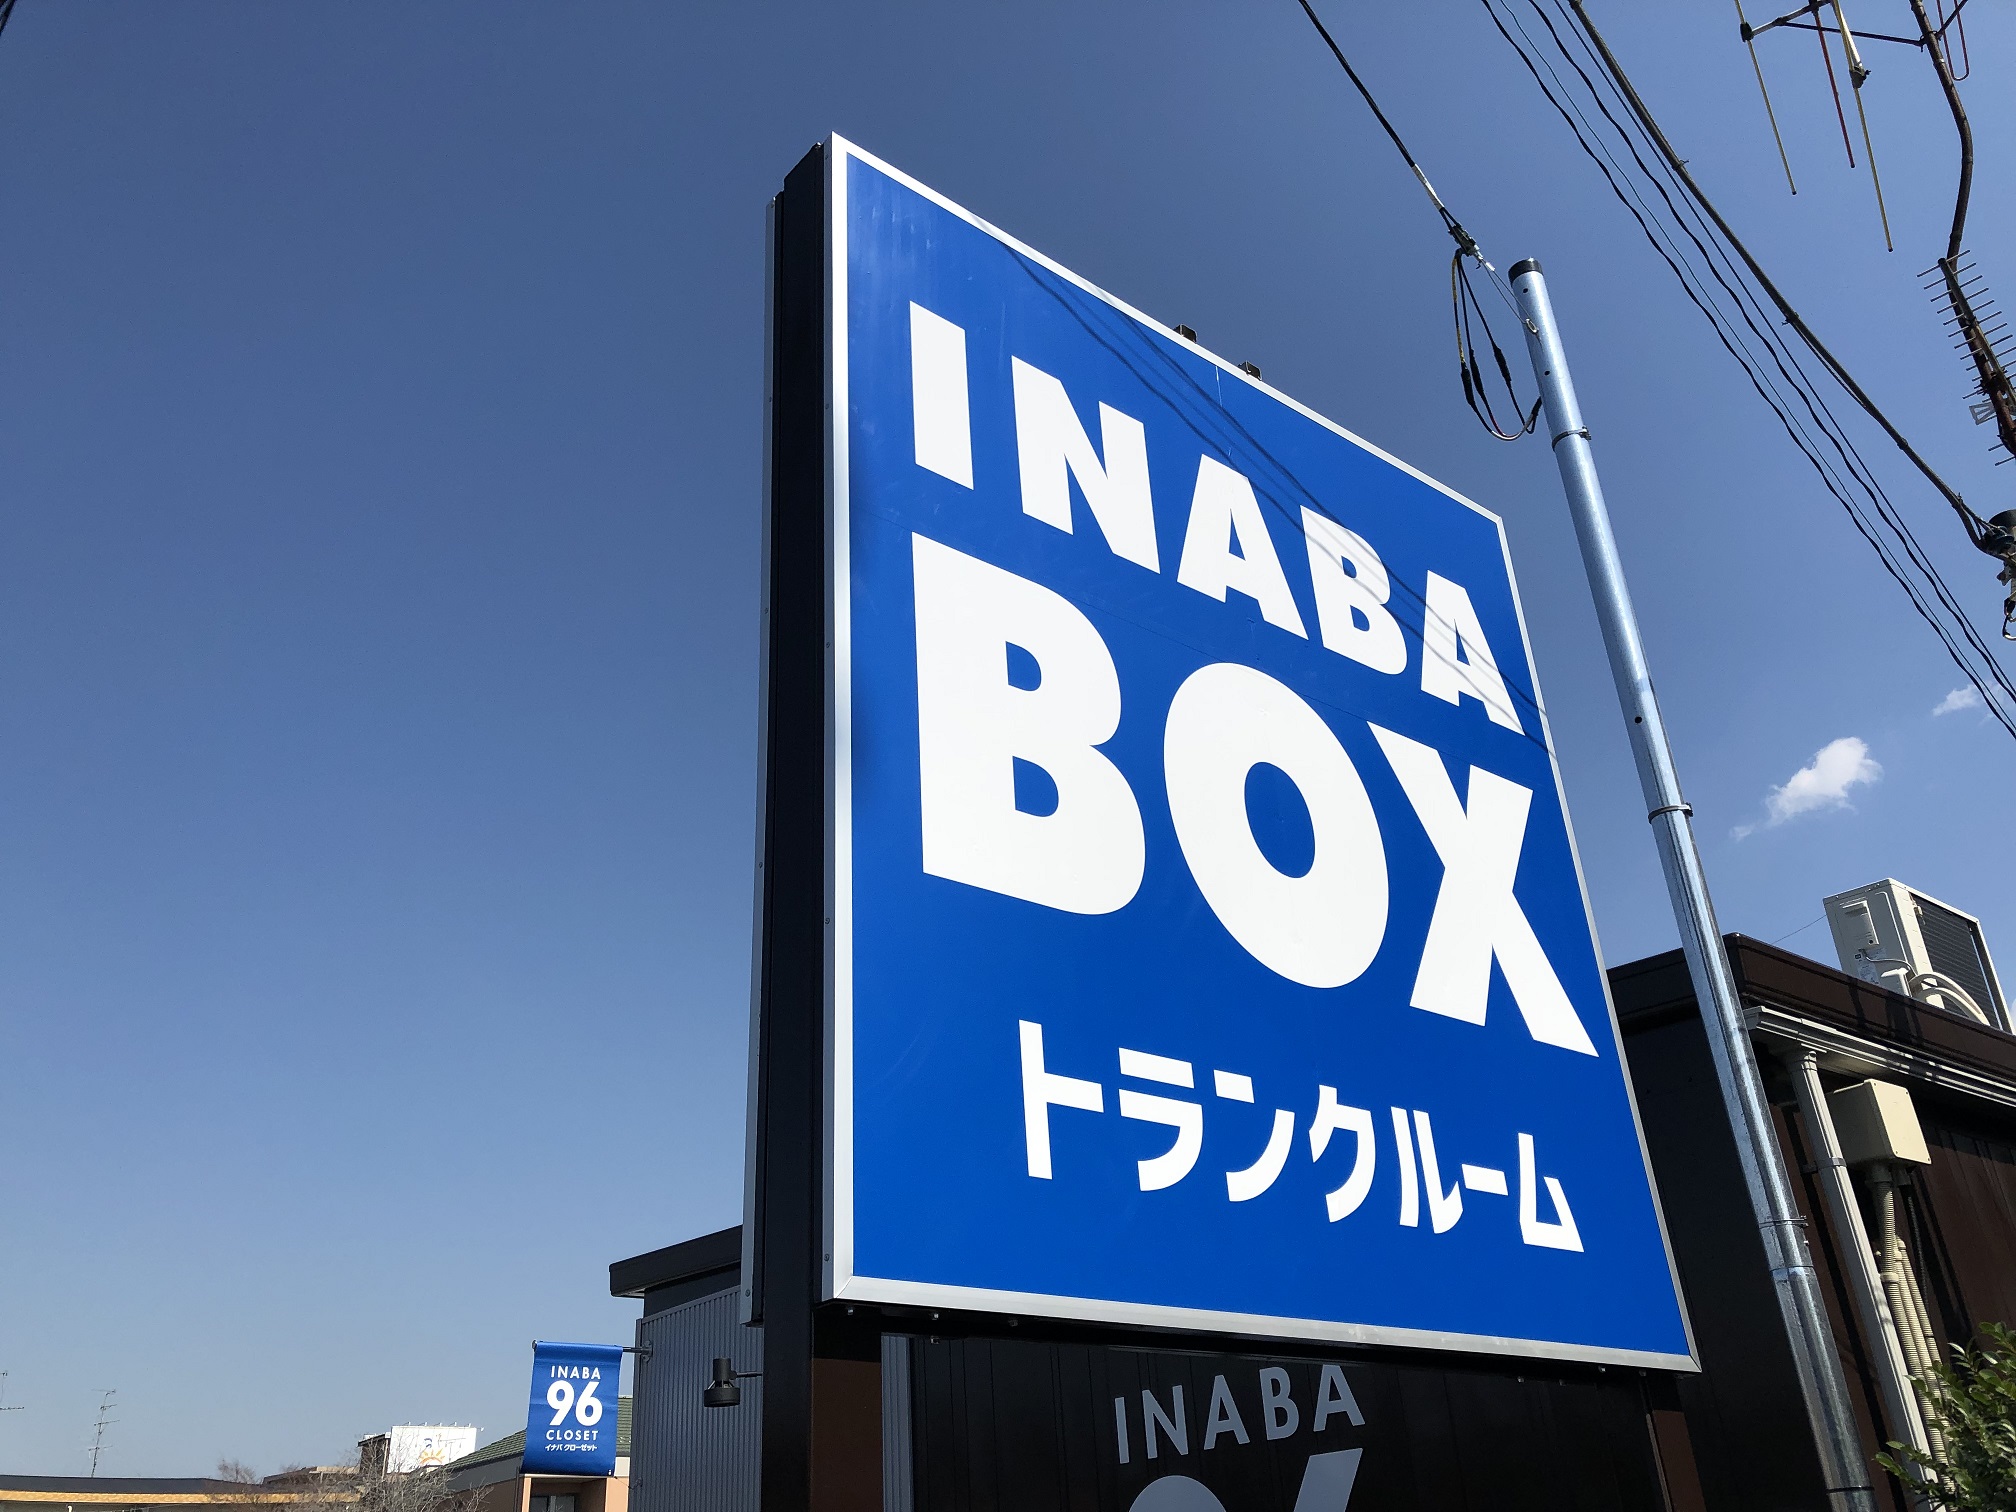 INABA96中浦和店 青い看板が目印です